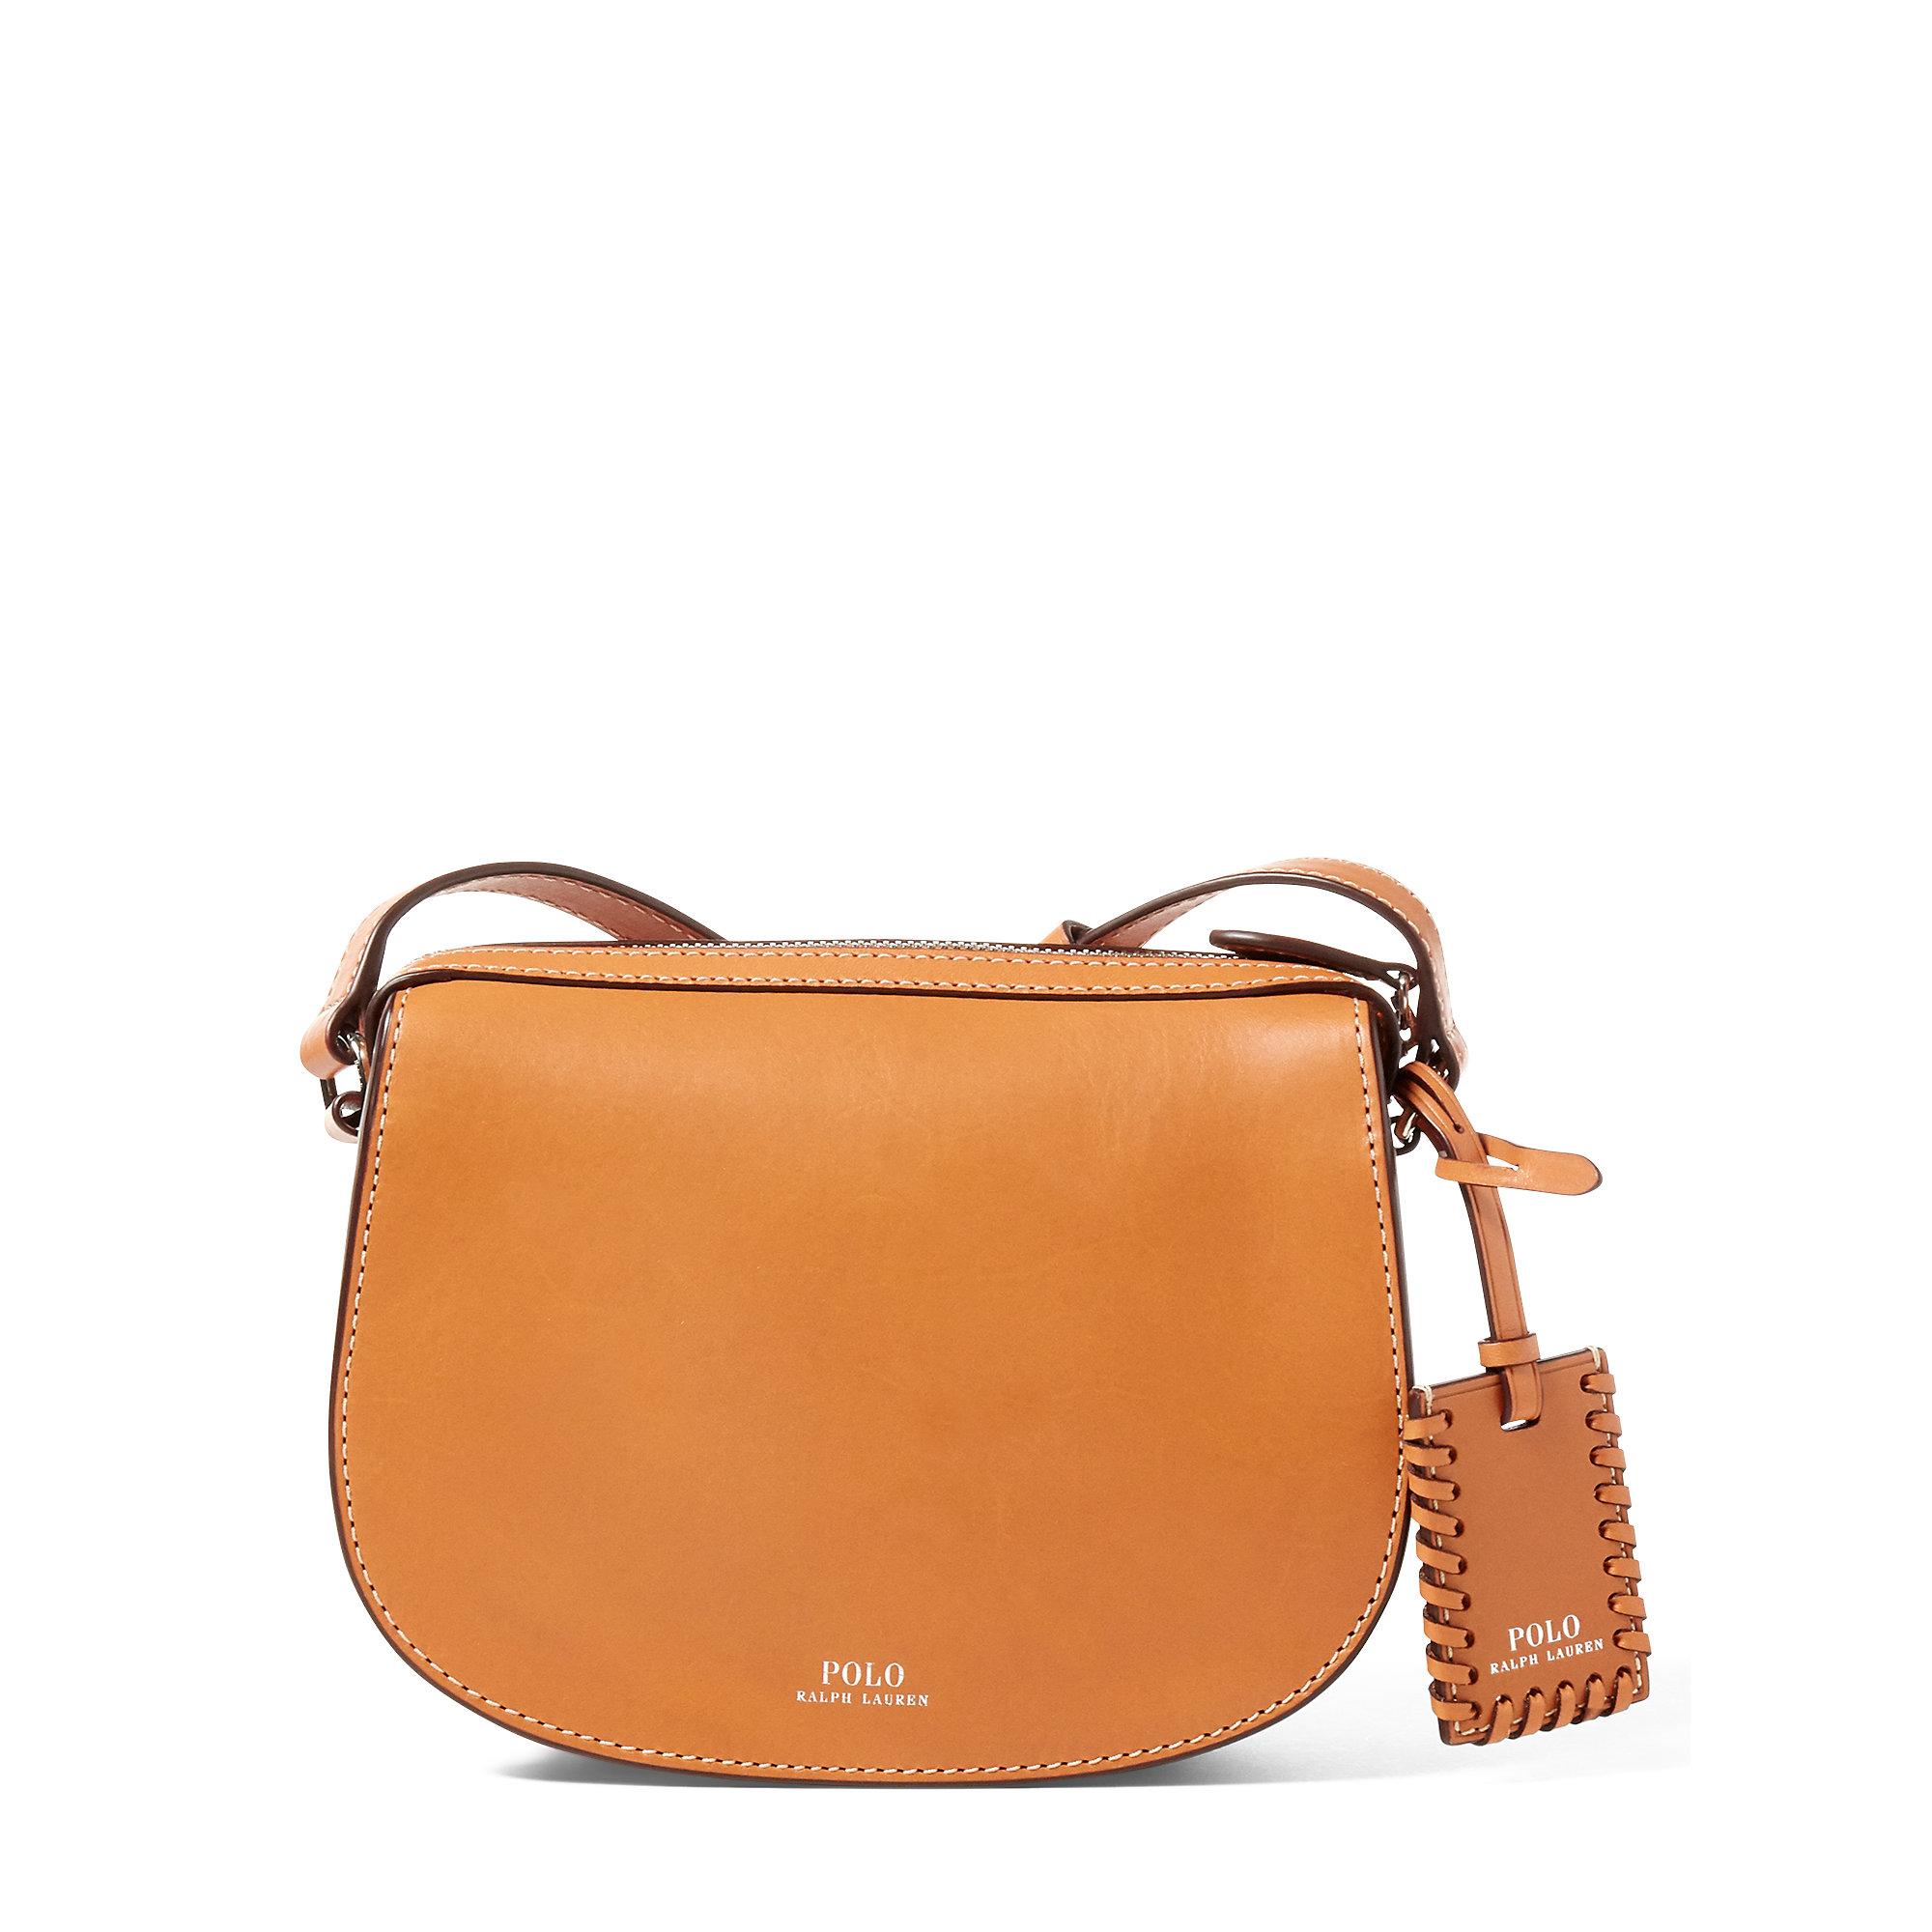 Polo Ralph Lauren Leather Mini Crossbody Bag in Brown - Lyst